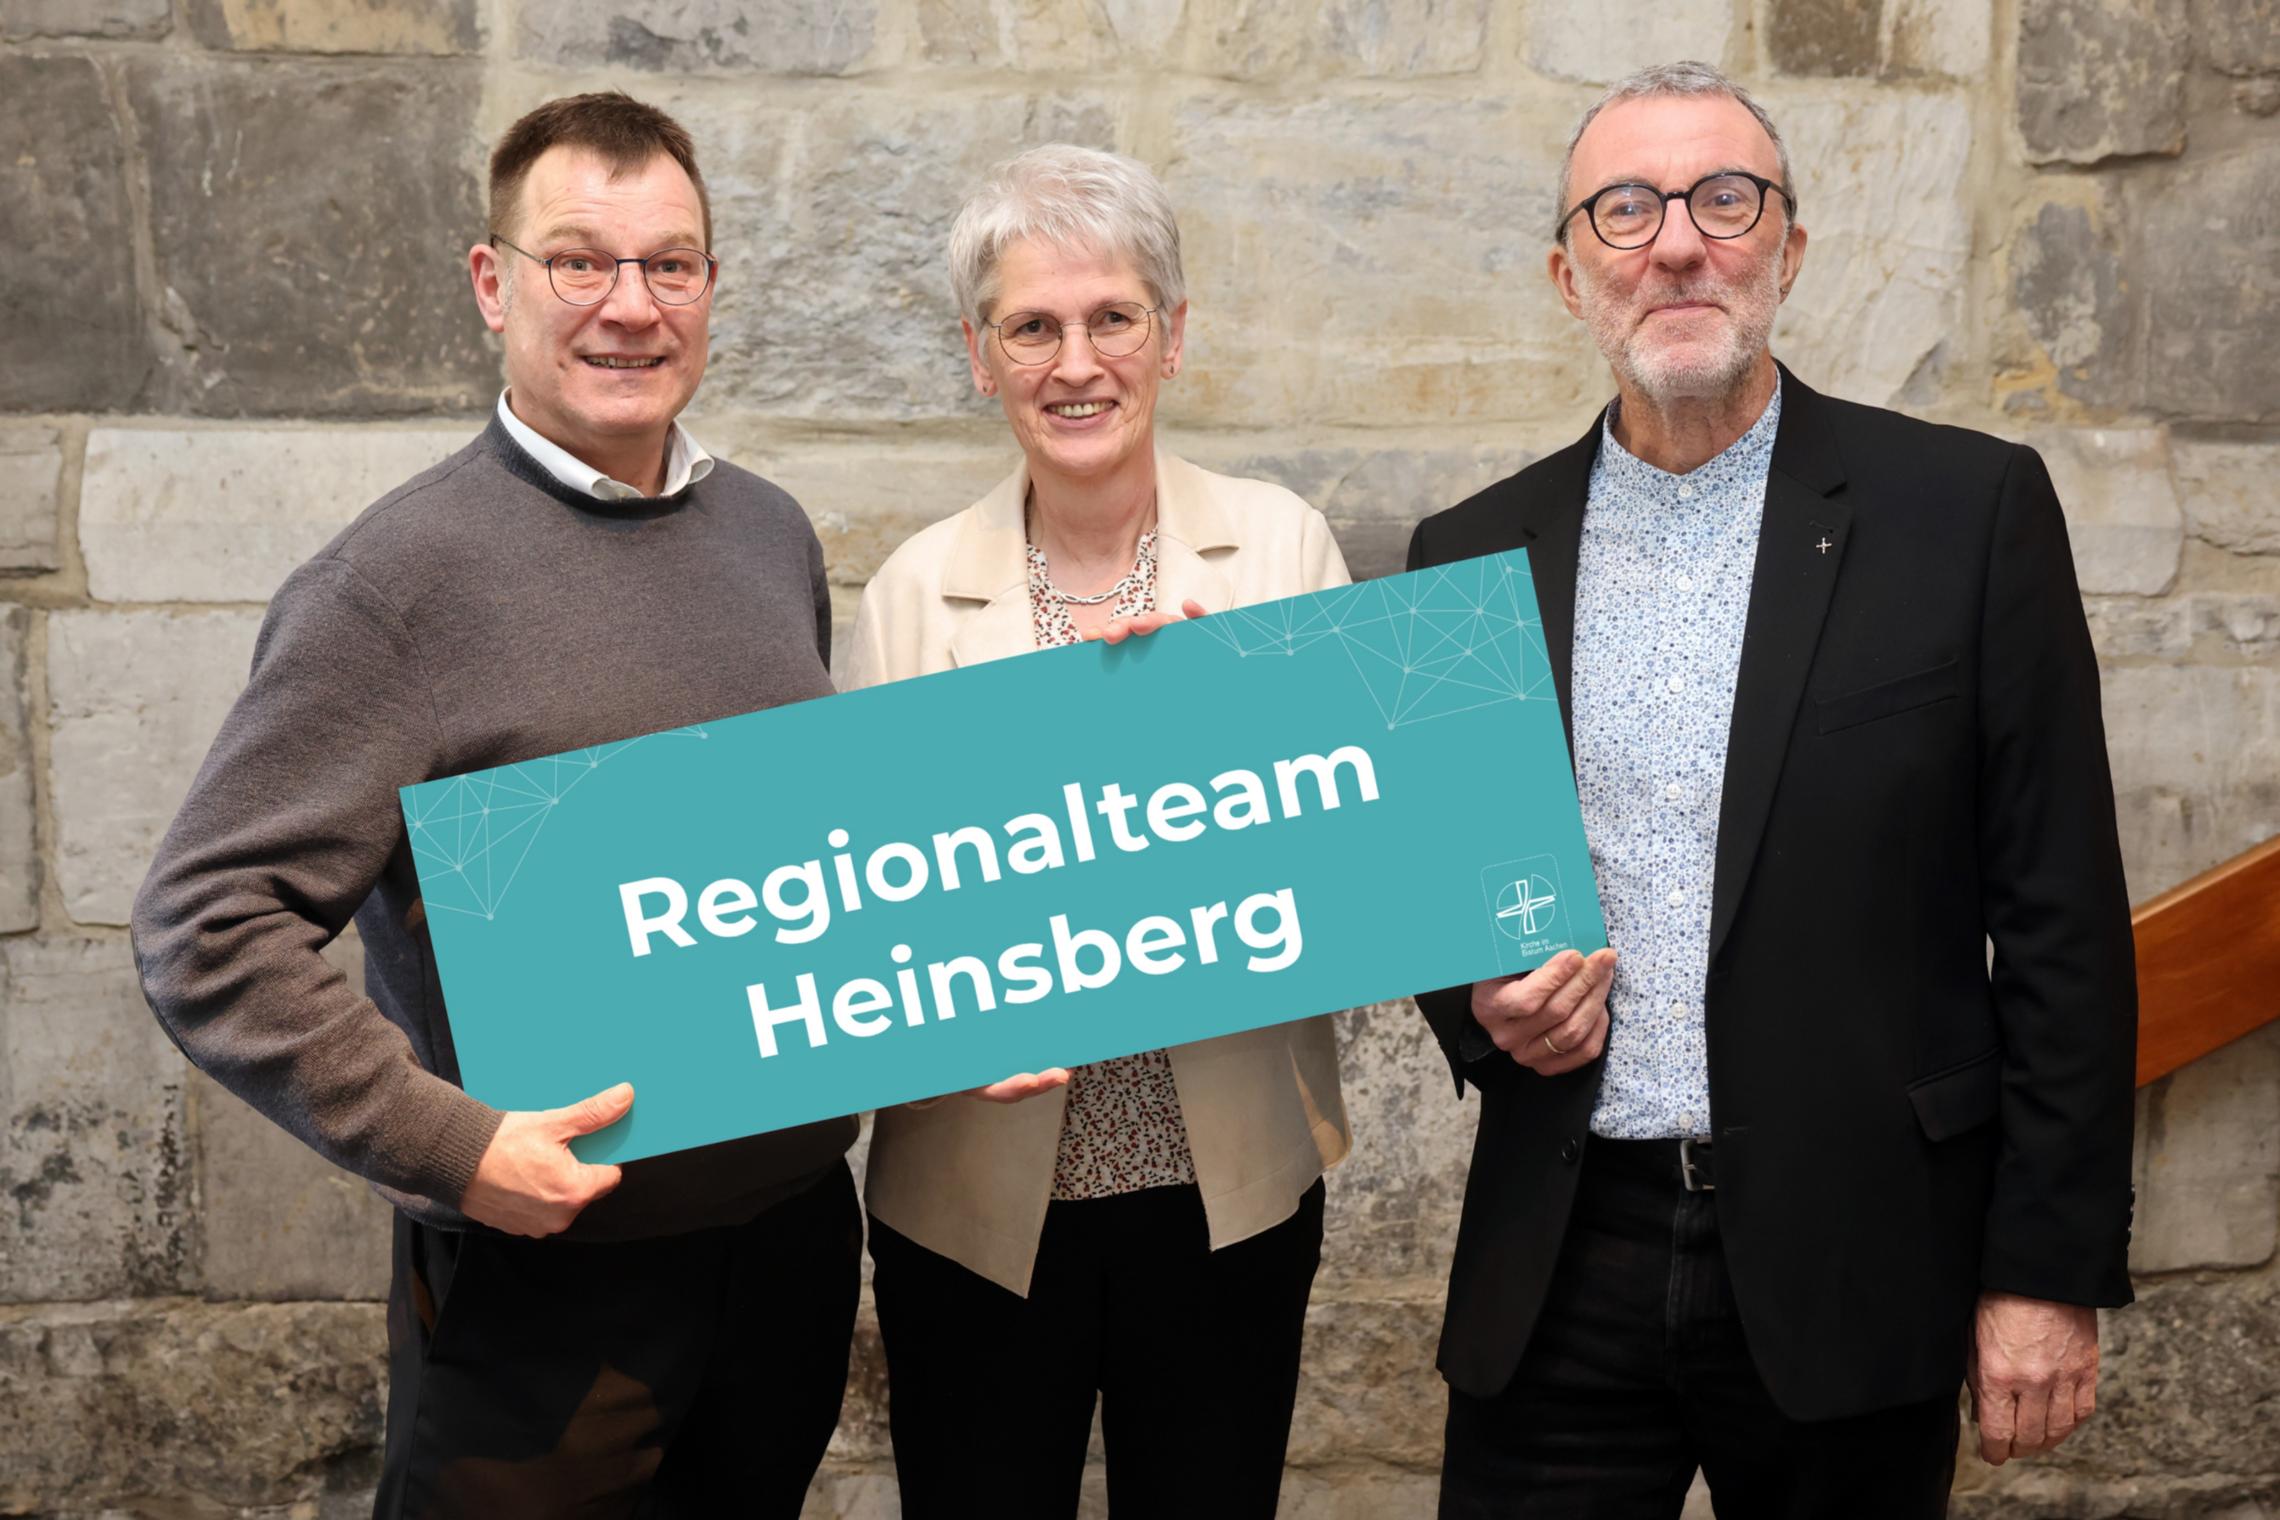 Regionalteam Heinsberg